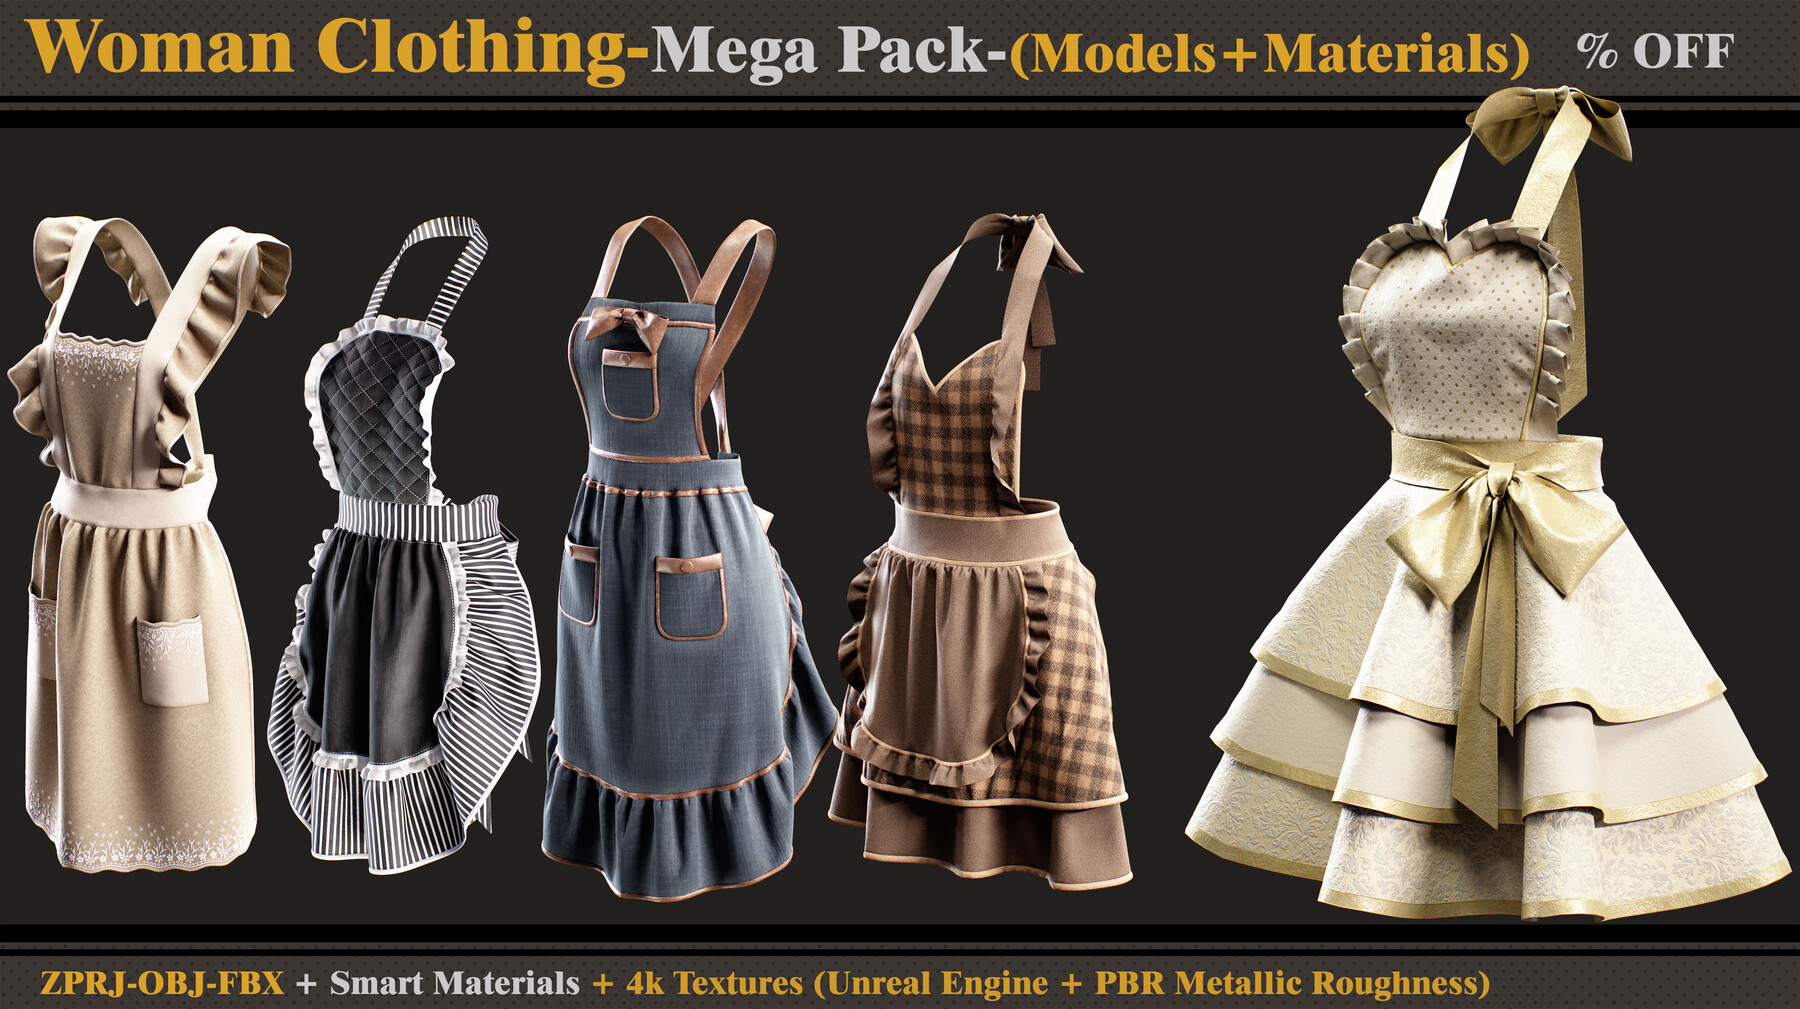 54 Medieval Women Clothing-MEGA PACK(zprj-fbx)